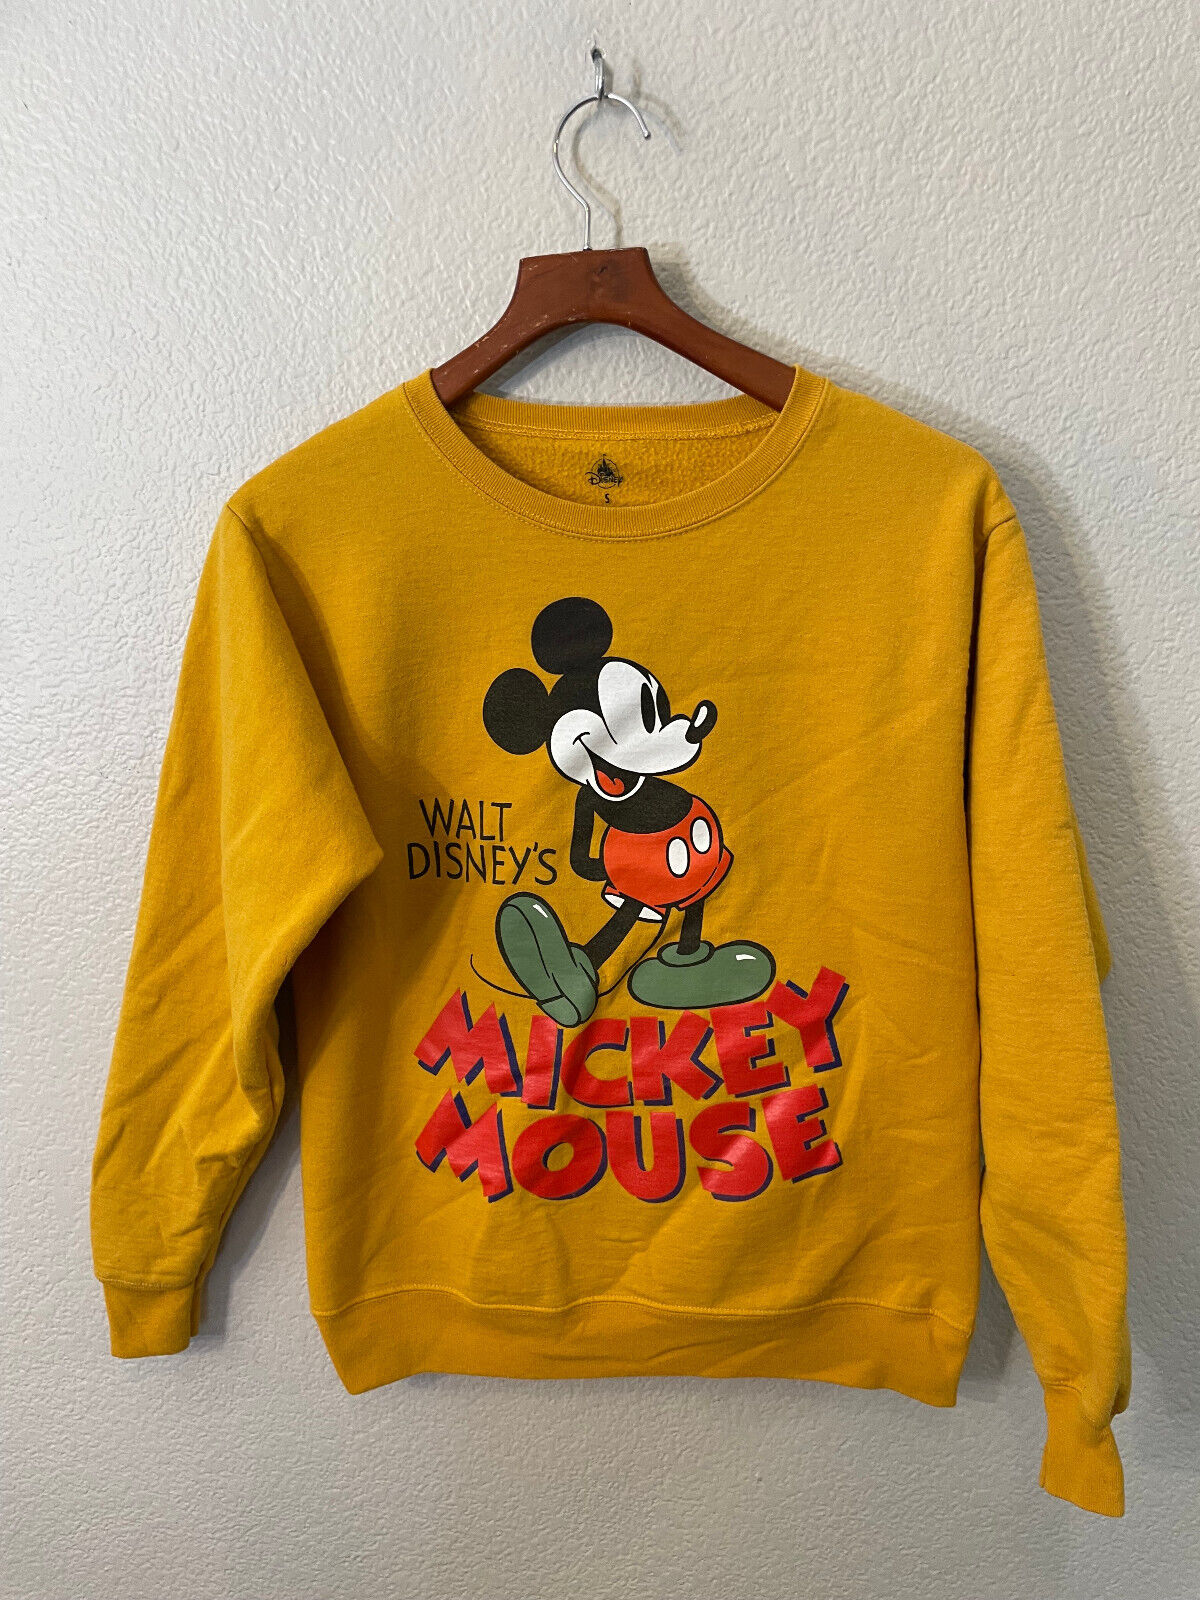 Mickey Mouse Sweatshirt Men\'s Small Gold Yellow Disney Crew Neck Lightweight